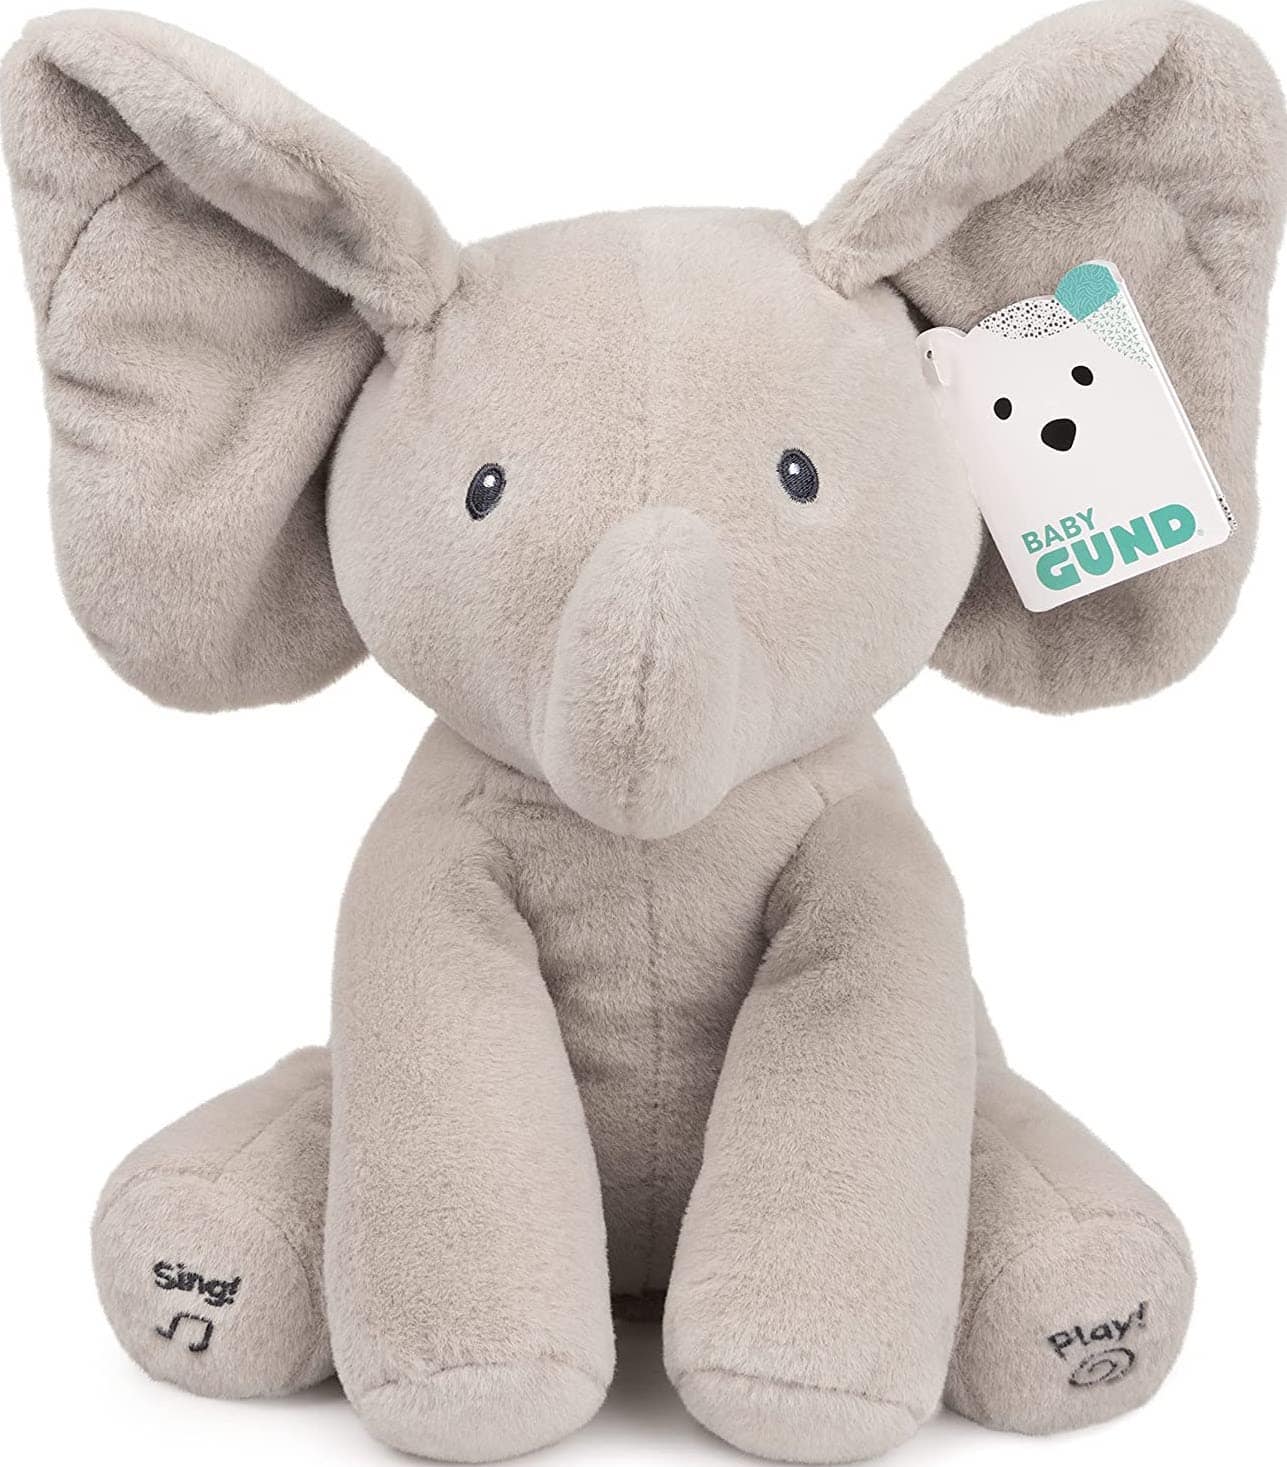 Grey elephant toy 